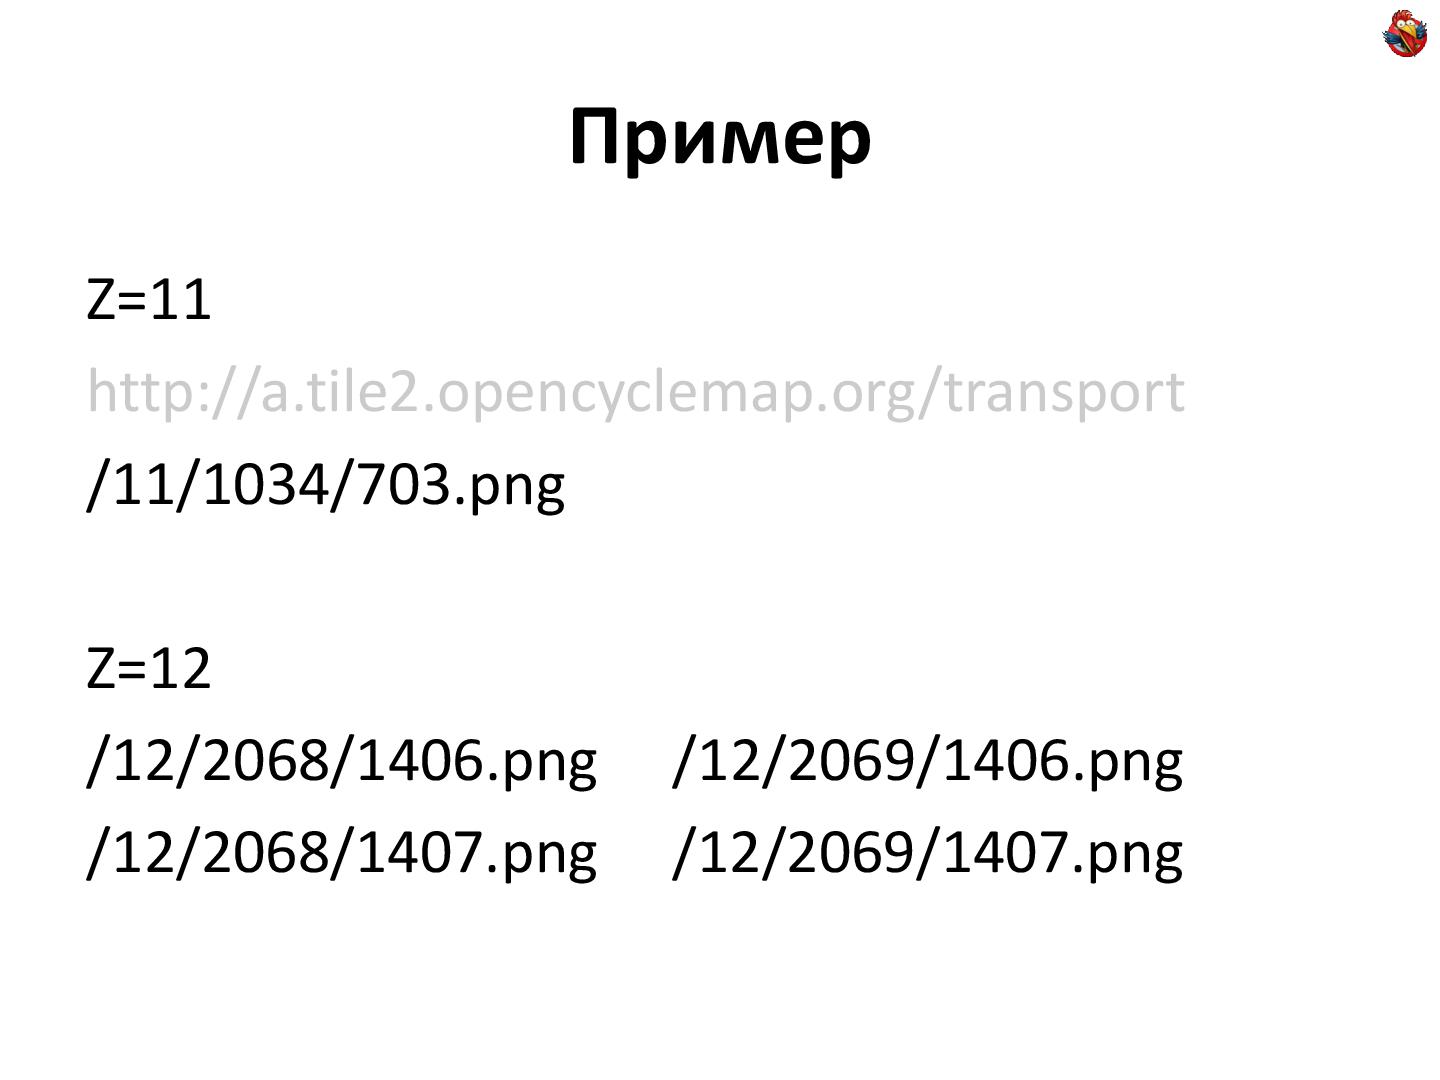 Файл:Картография в Windows Phone (Александр Сороколетов, ADD-2012).pdf